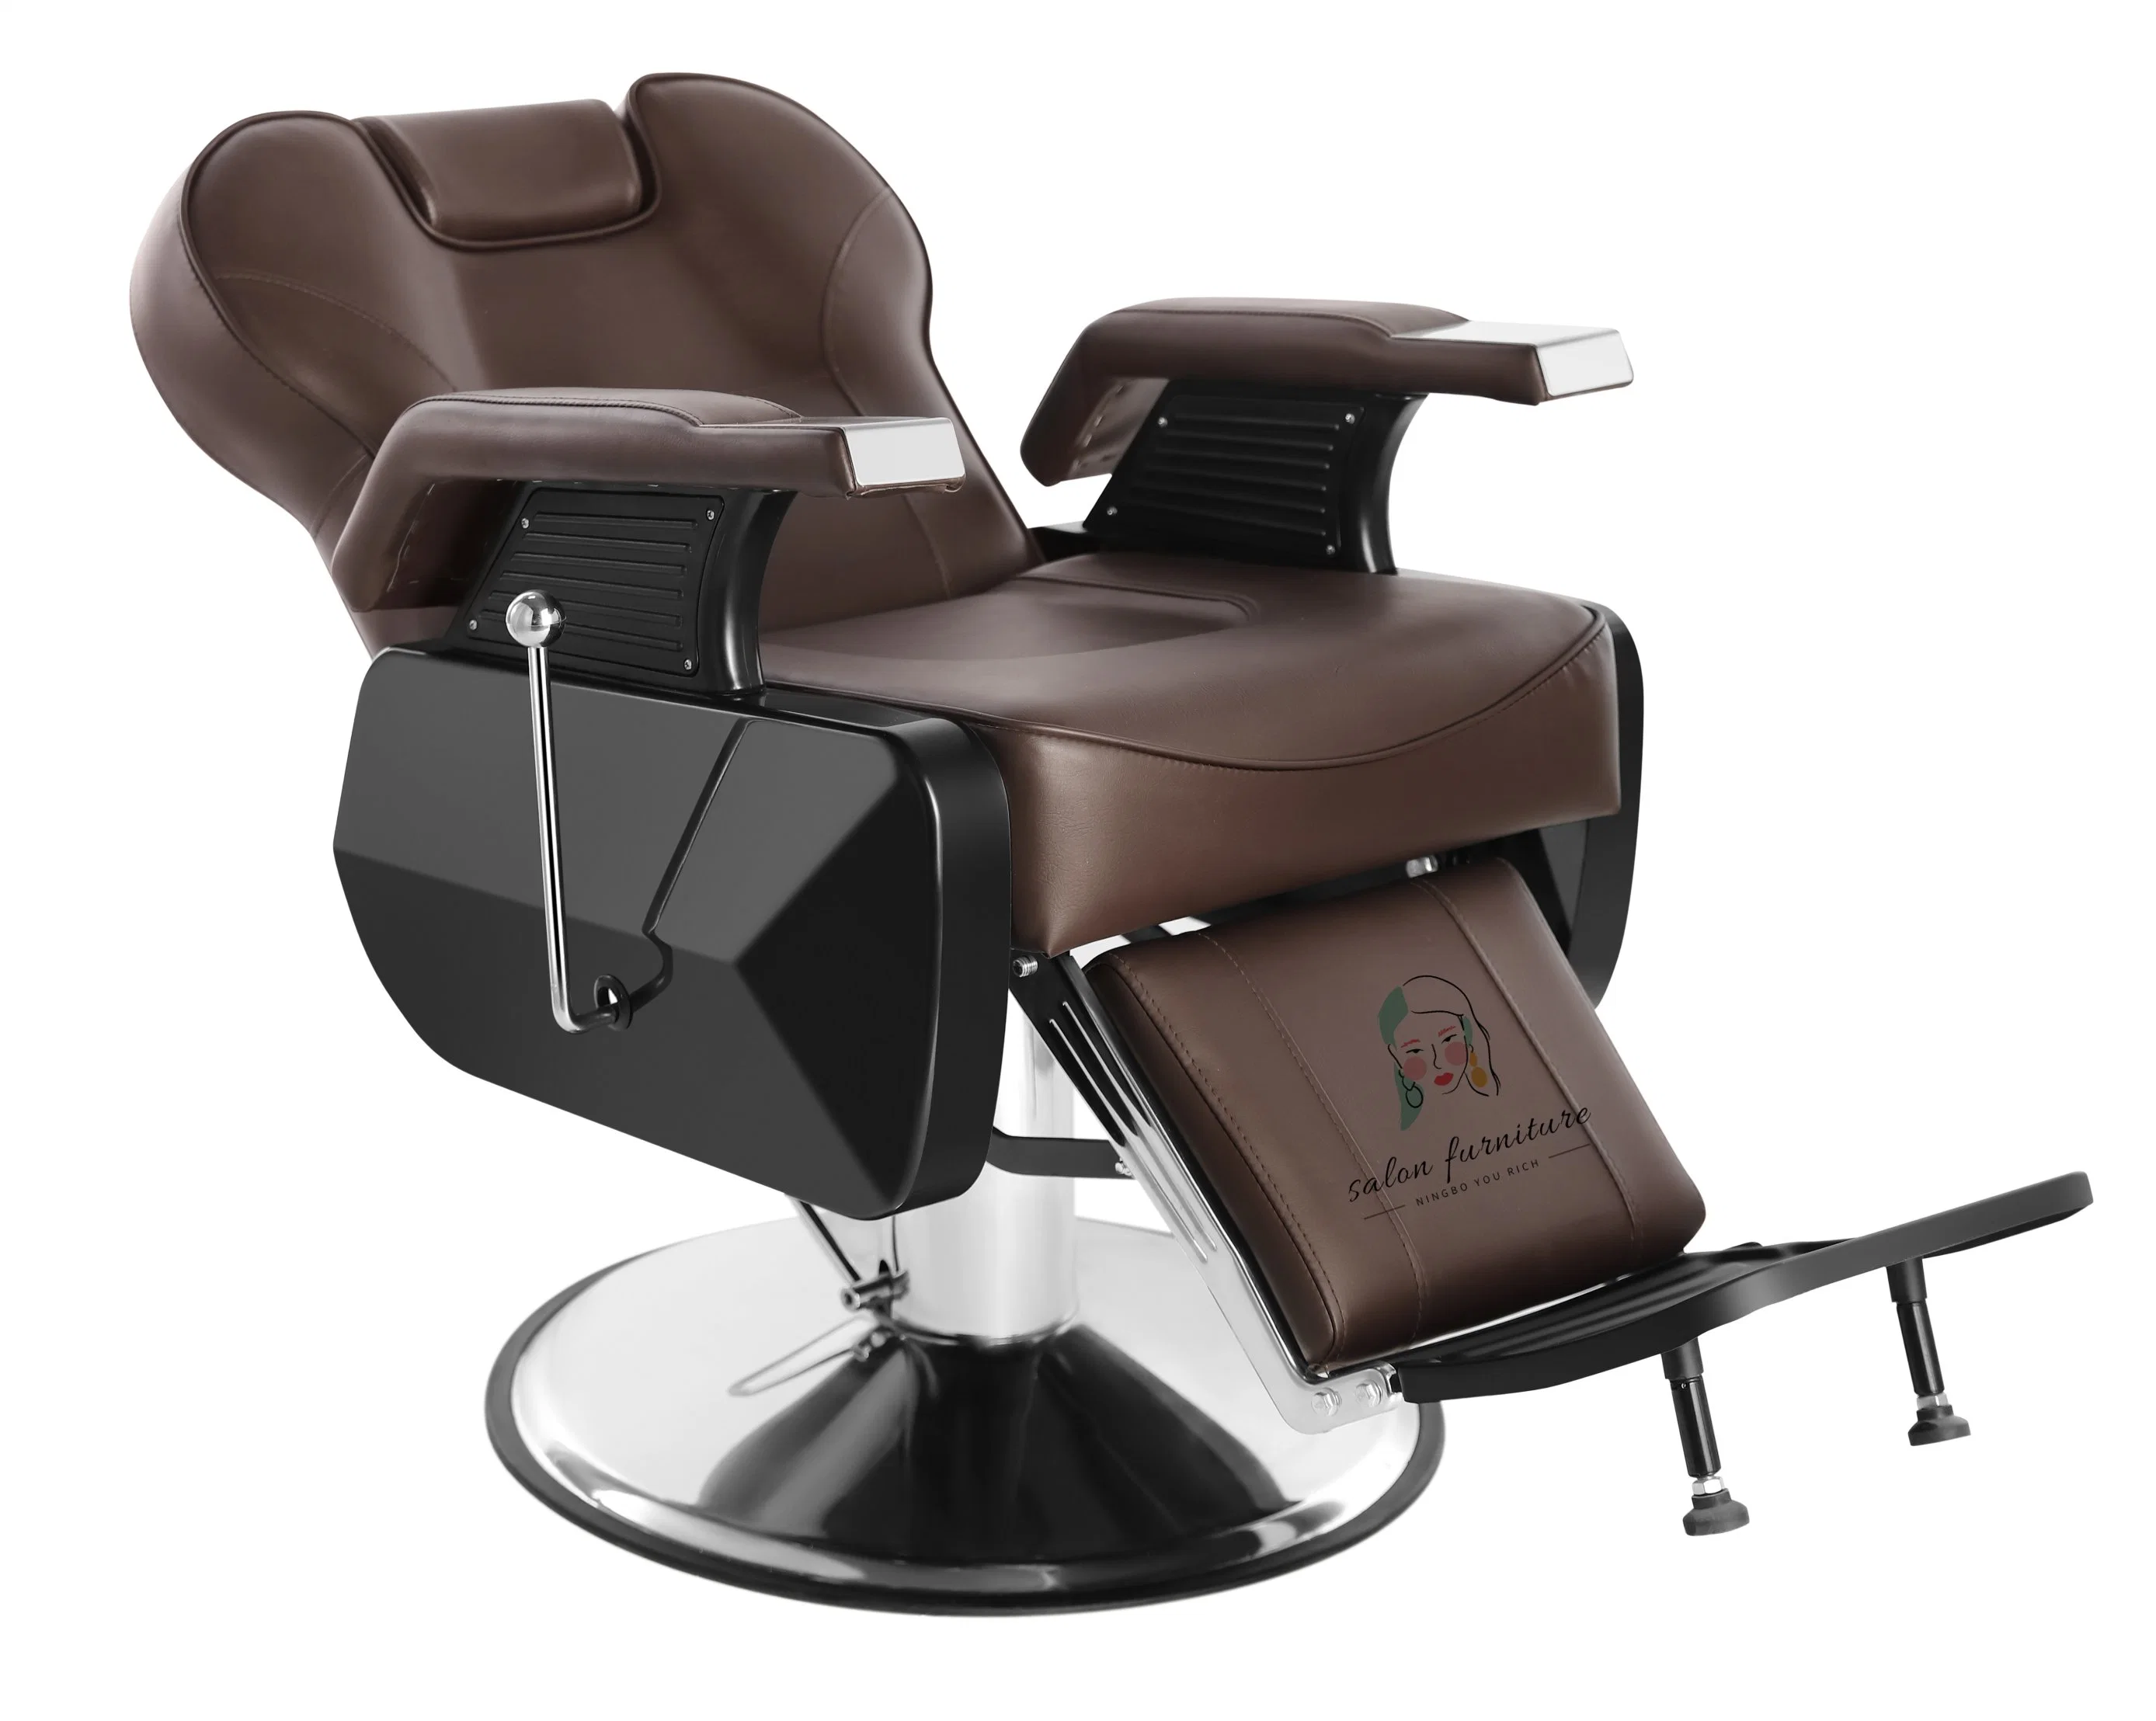 Classic Barber Chair Beauty Friseursalon Möbel für Barber Shop